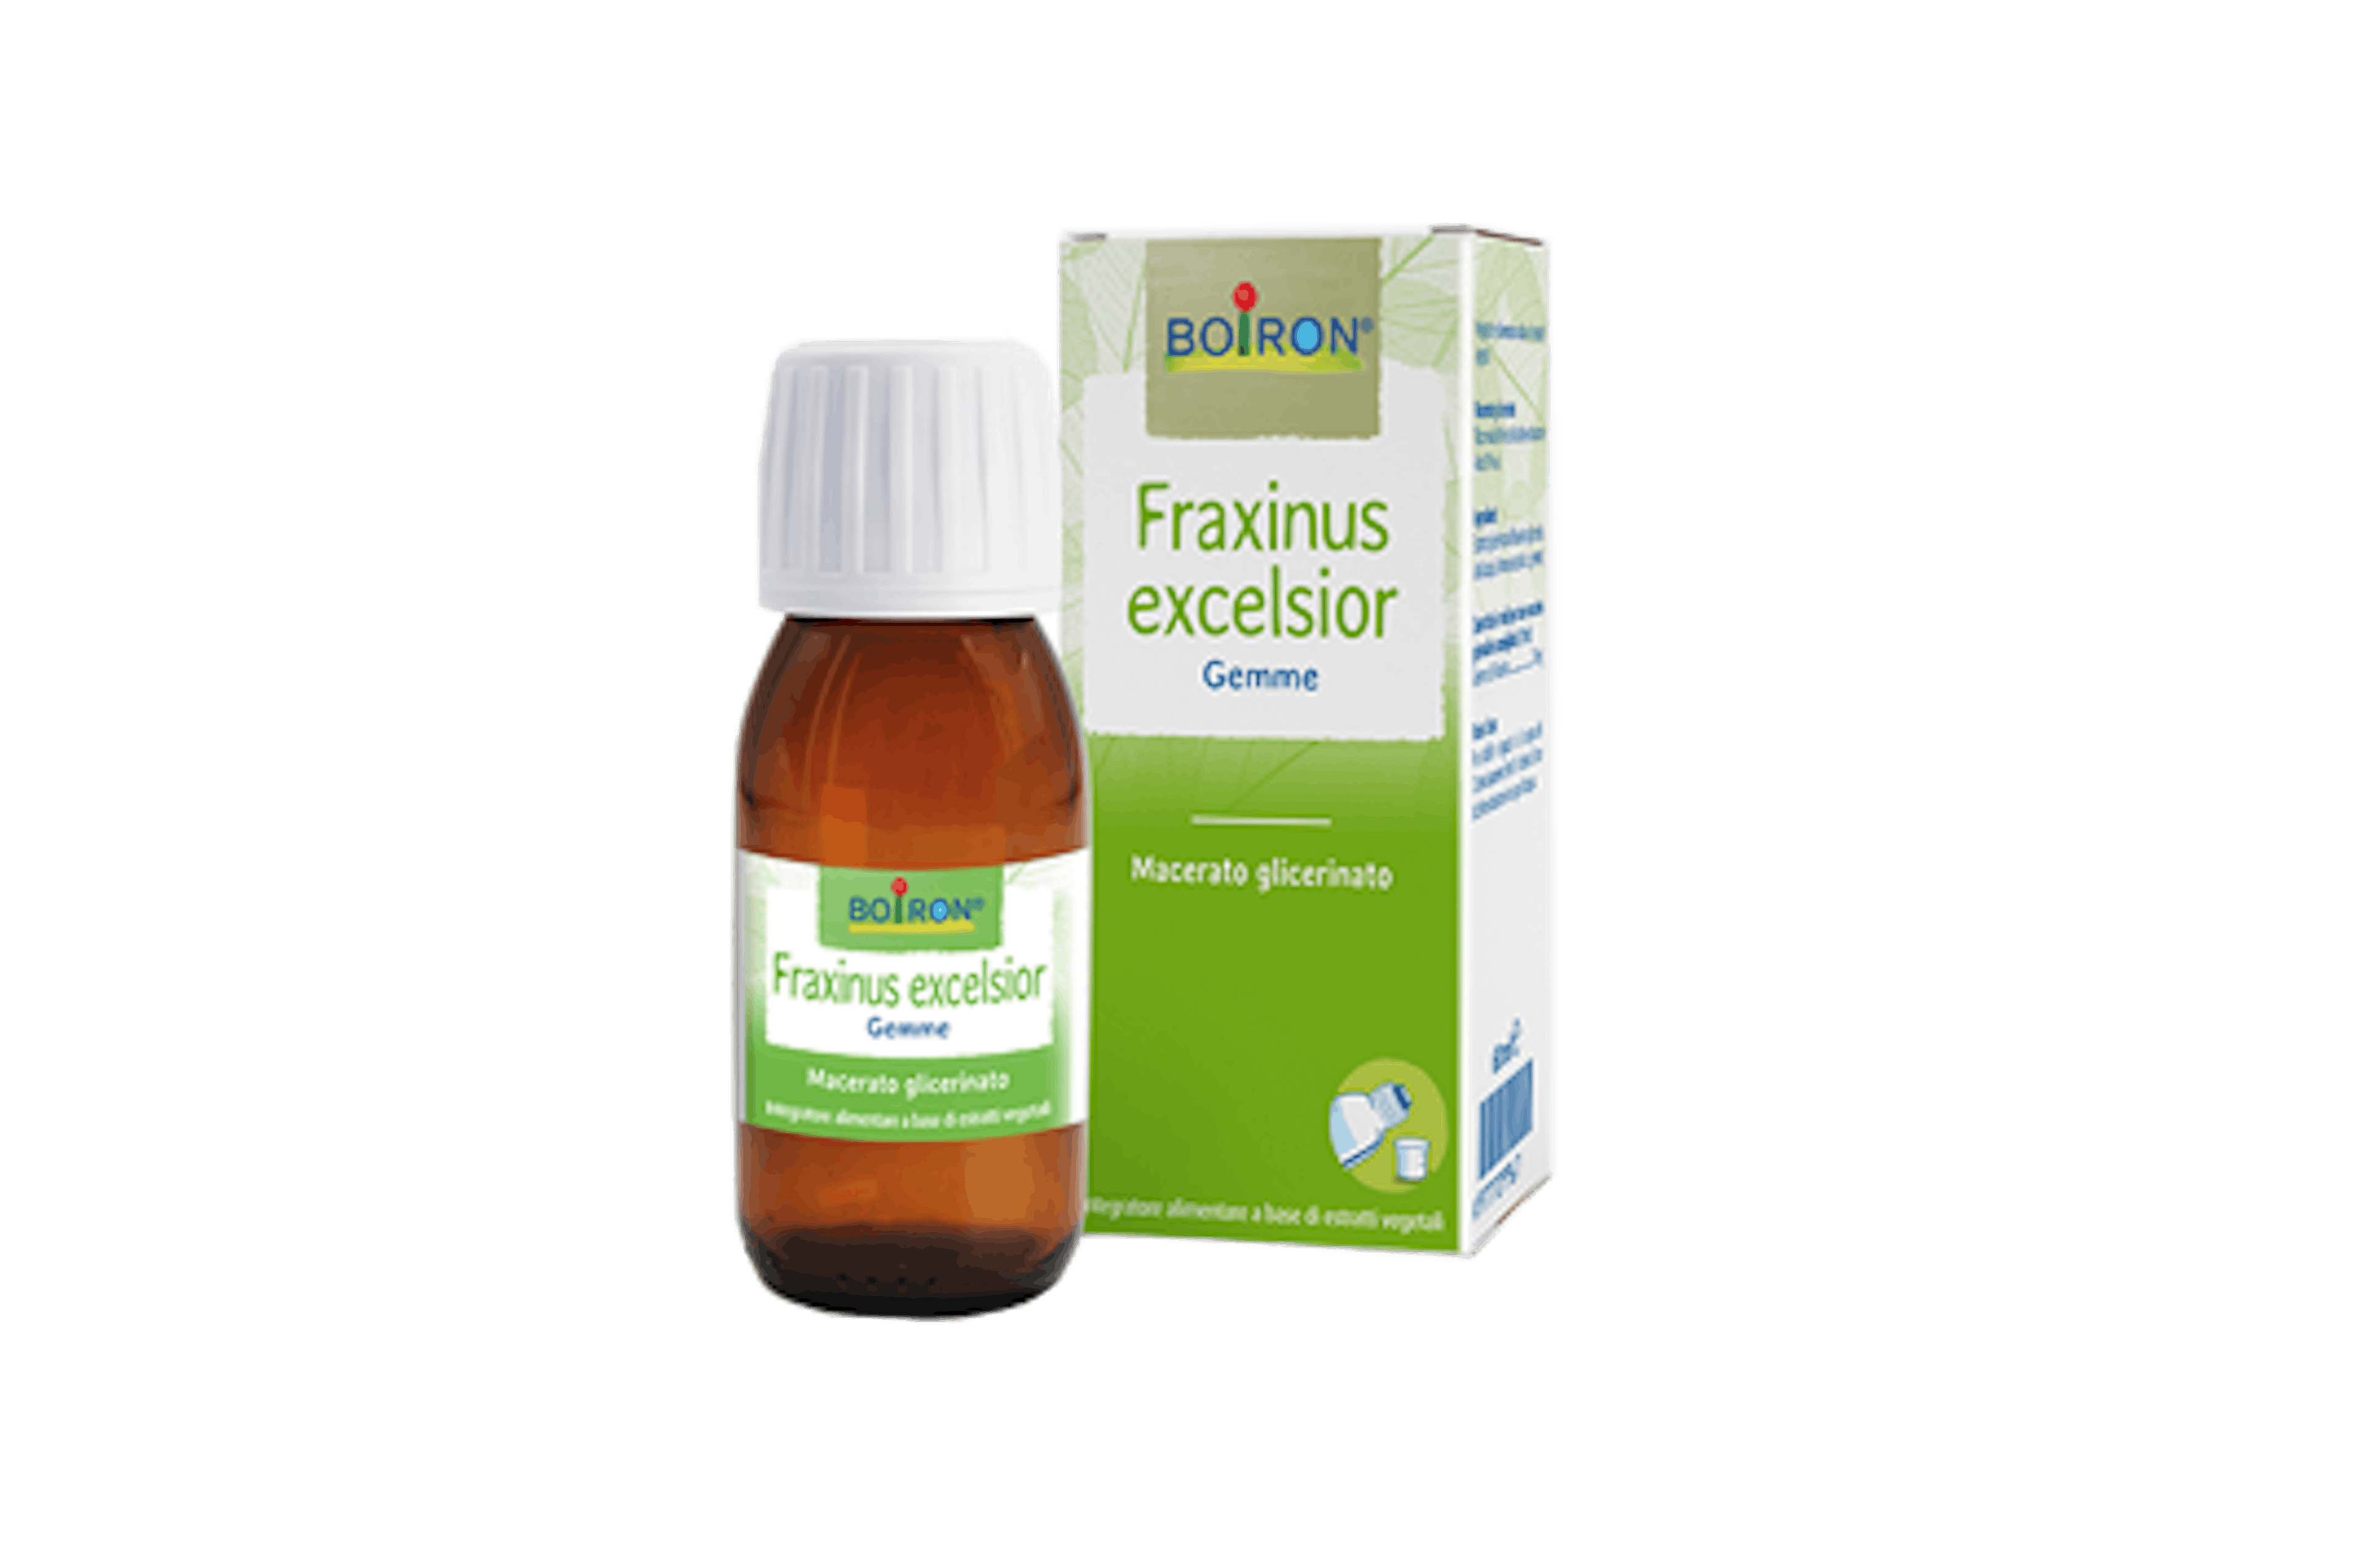 Fraxinus excelsior Gemme flacone da 60 ml con bicchiere dosatore.